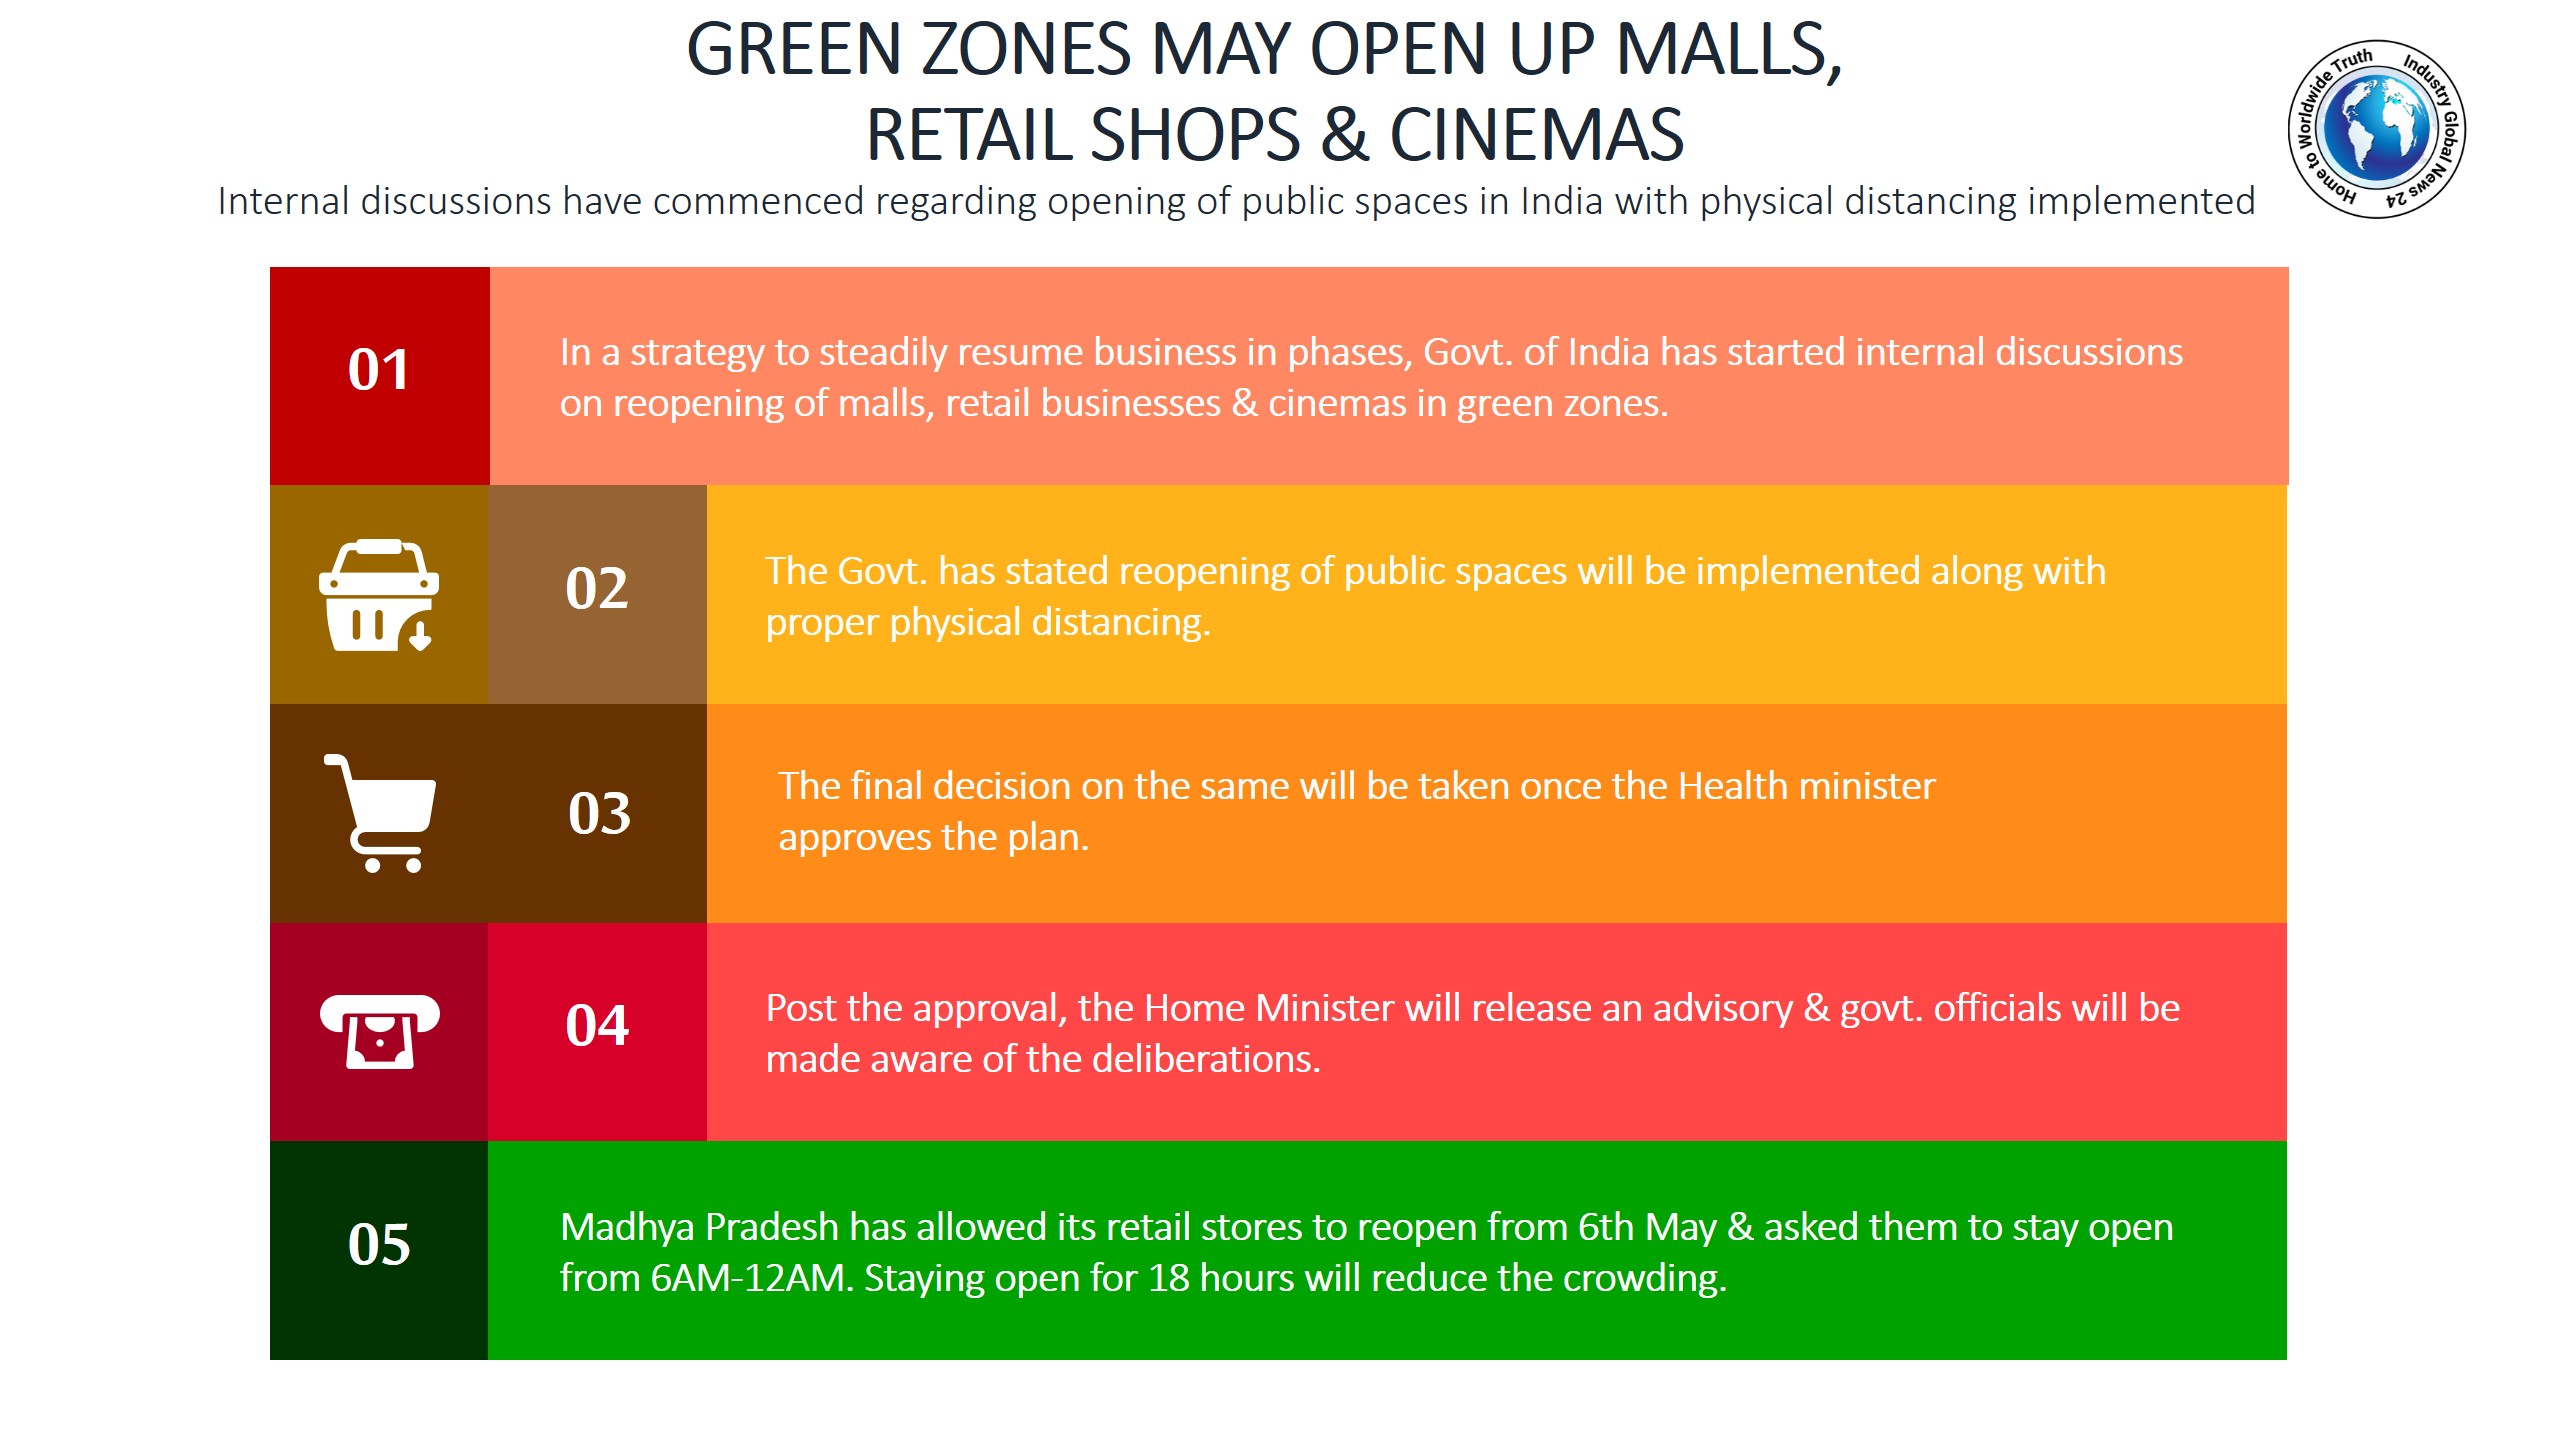 Green zones may open up malls, retail shops & cinemas